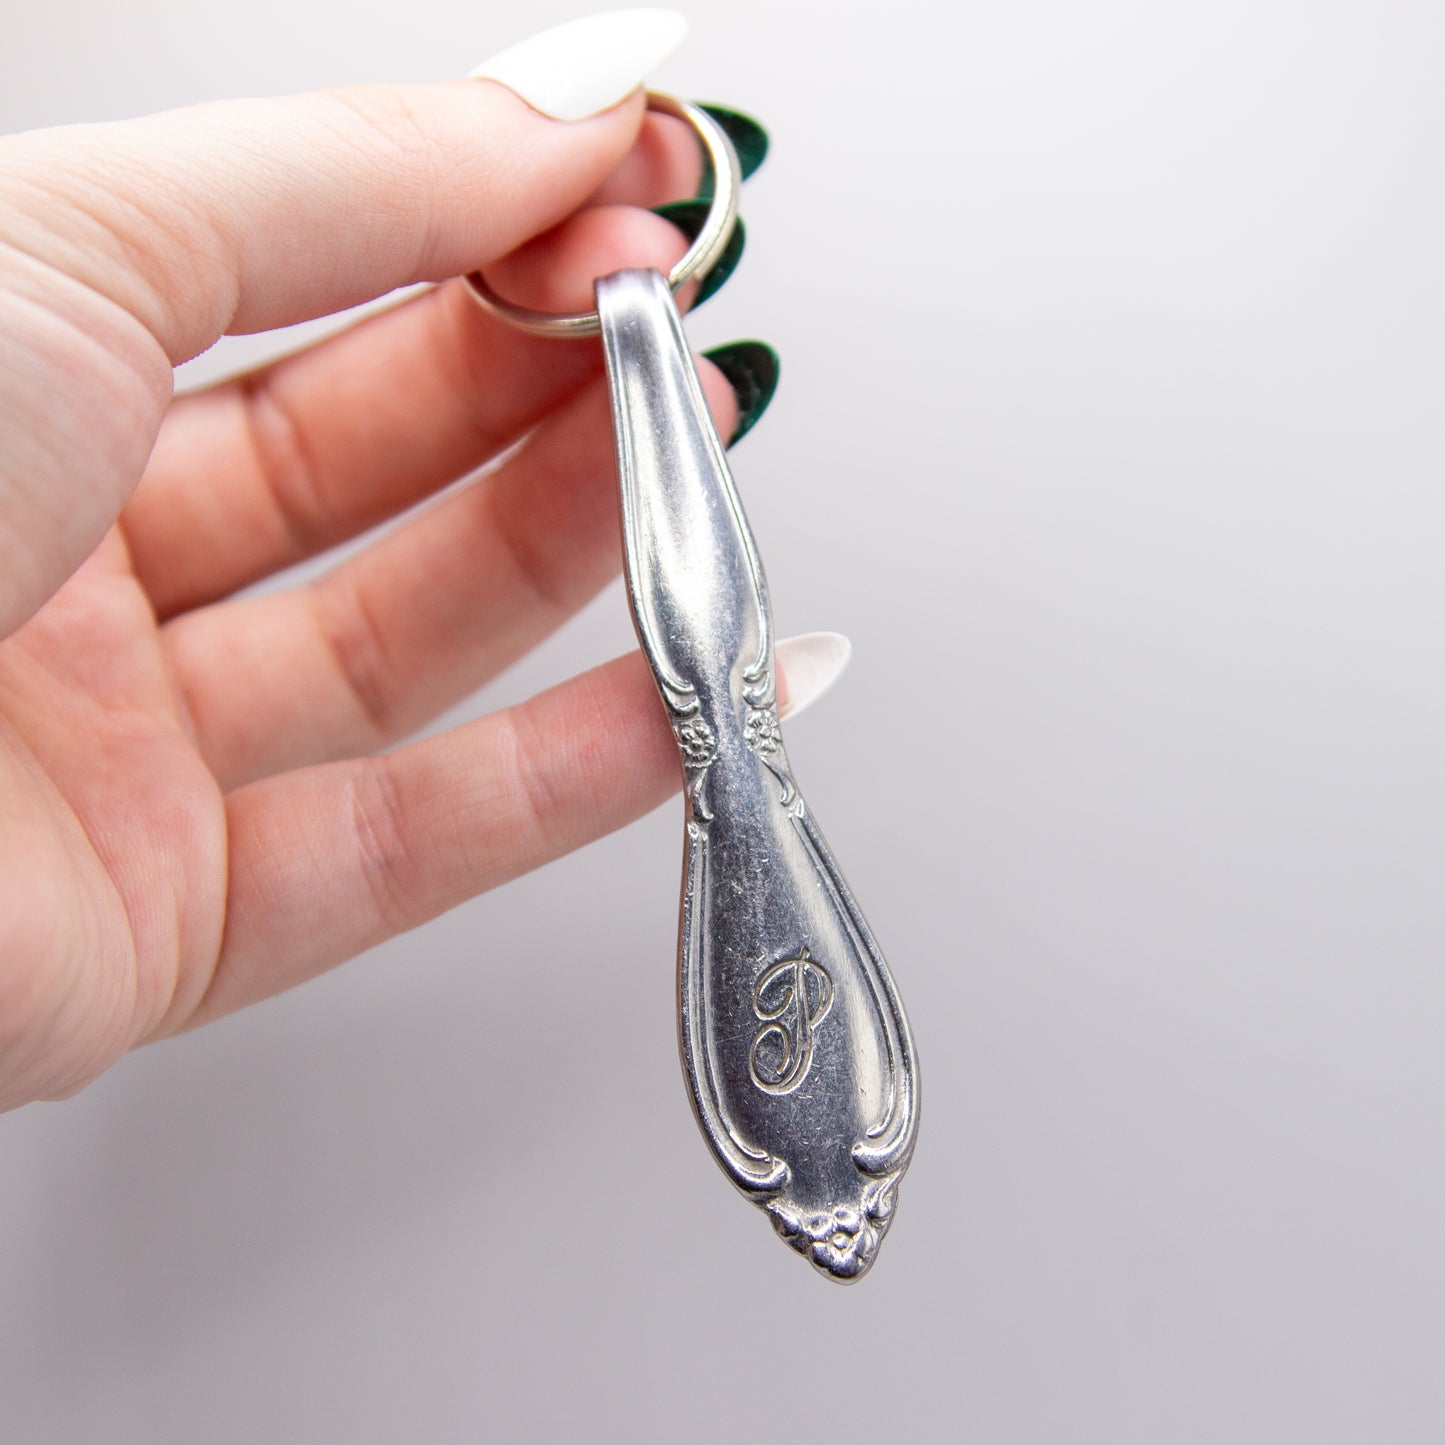 Monogram "P" Spoon Keychain